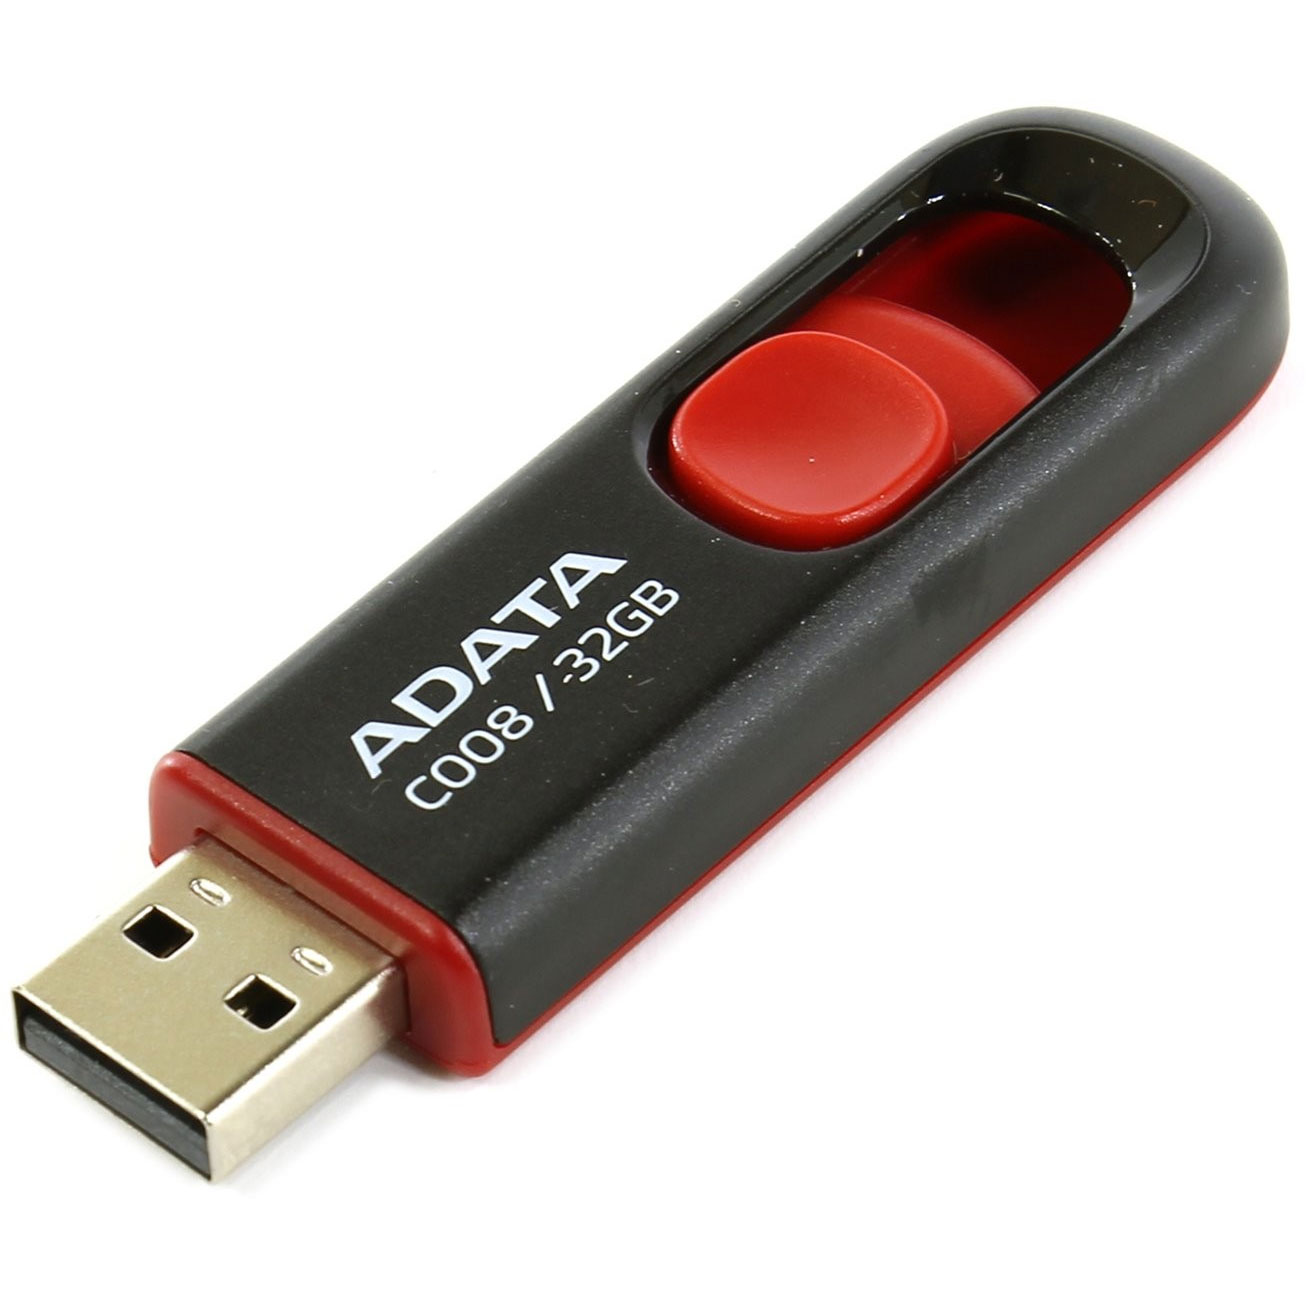  Memorie USB A-DATA AC008-32G-RKD, 32GB, USB 2.0, Rosu 